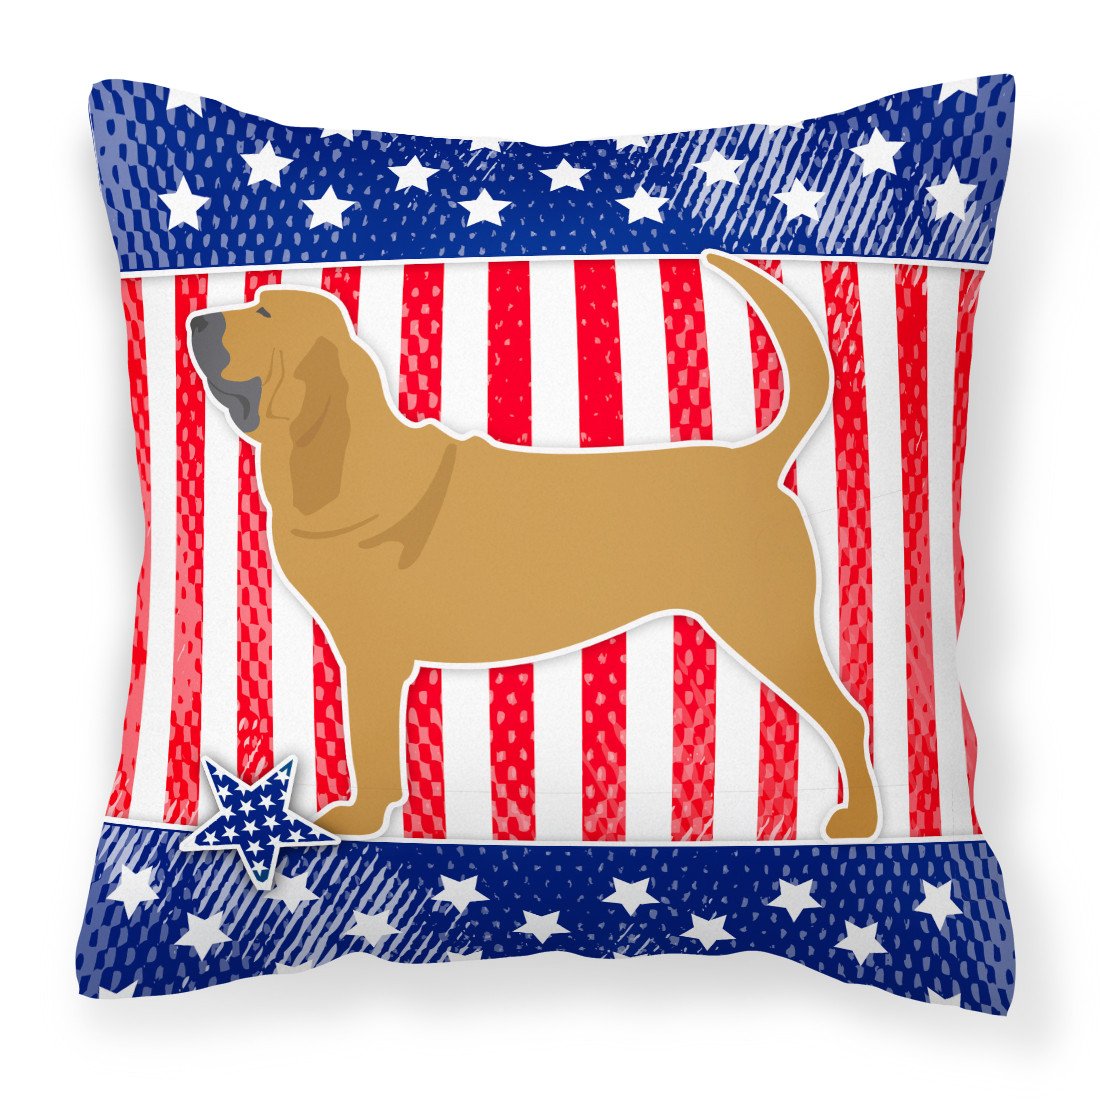 USA Patriotic Bloodhound Fabric Decorative Pillow BB3284PW1818 by Caroline's Treasures